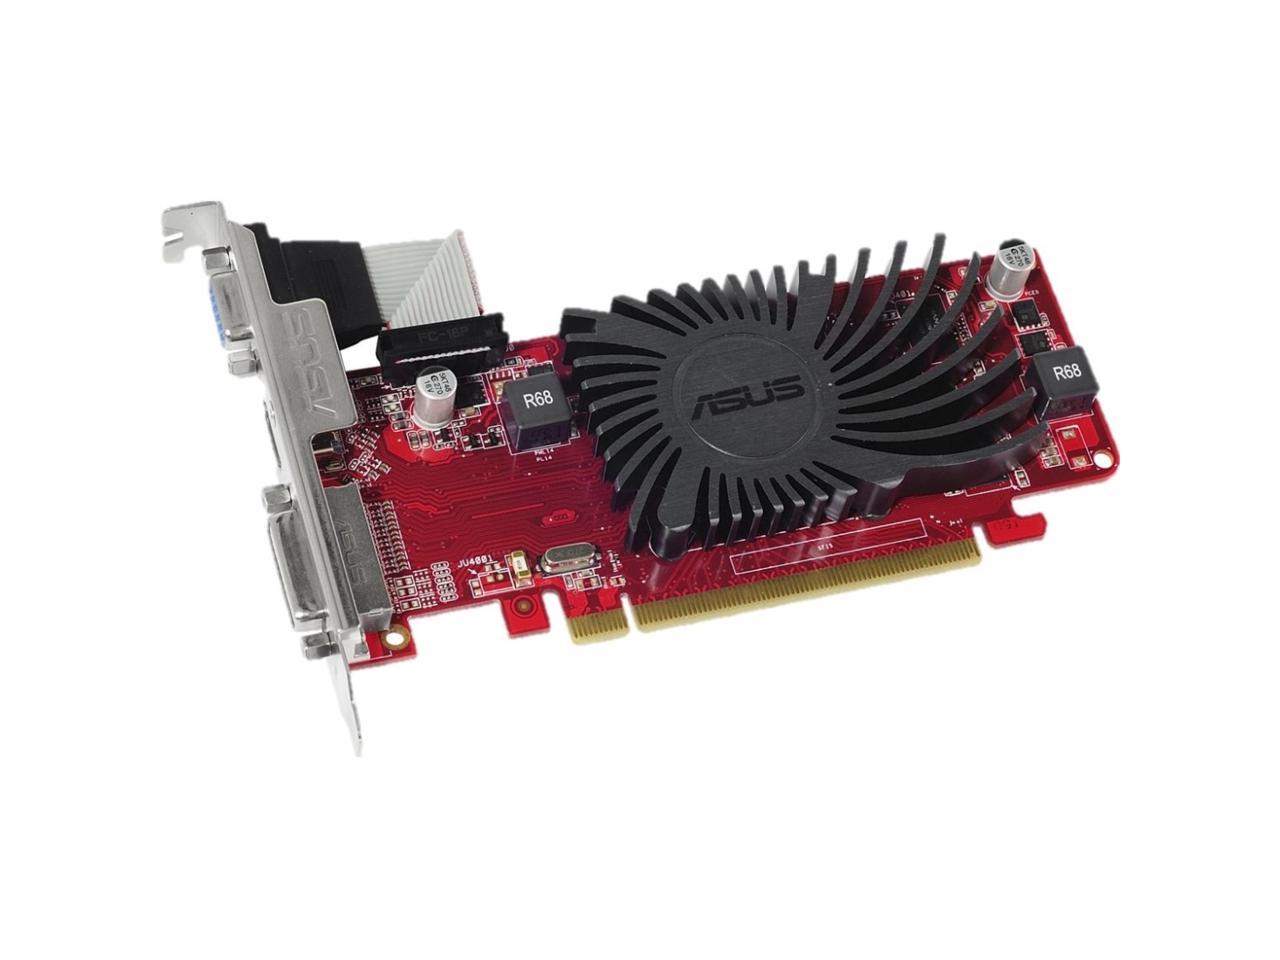 ASUS Radeon R5 230 DirectX 11 R5230-SL-1GD3-L 1GB 64-Bit DDR3 PCI Express 2.1 HDCP Ready CrossFireX Support Low Profile Video Card